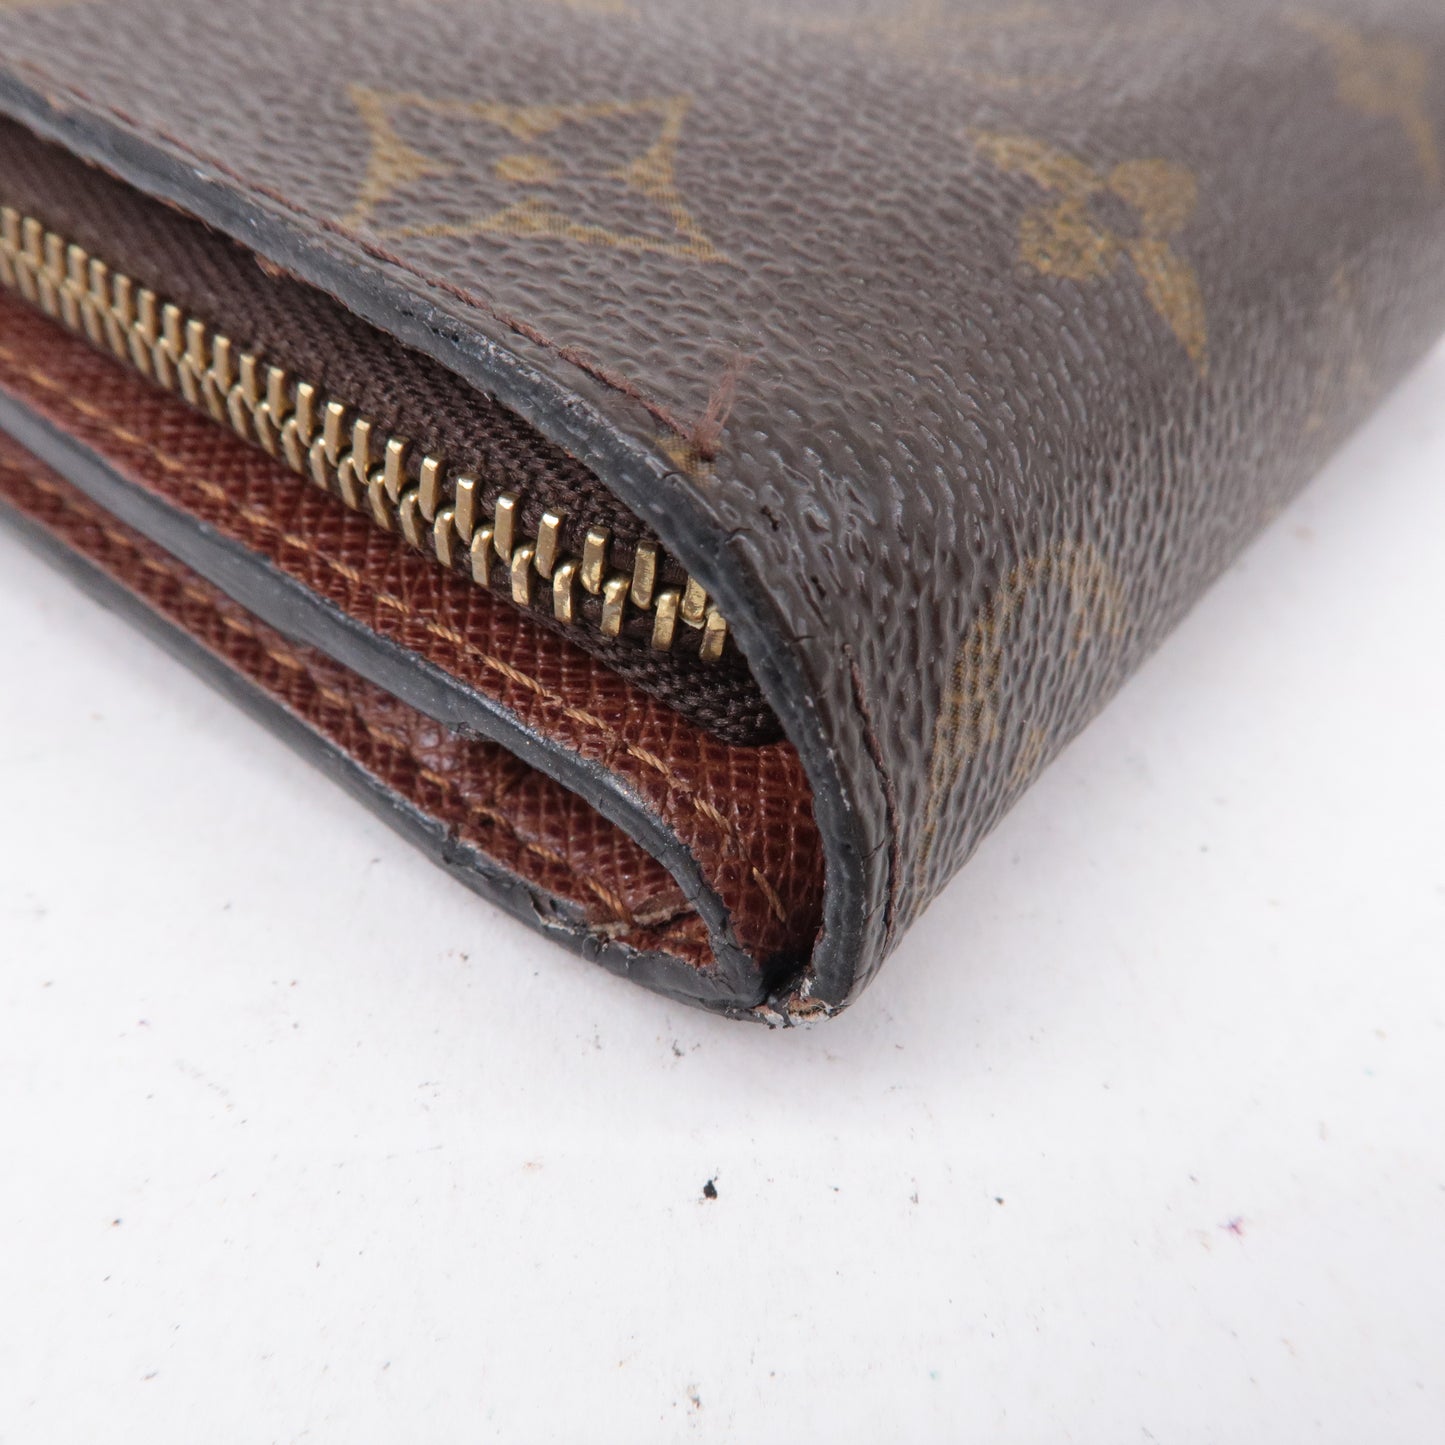 Louis Vuitton Louis Monogram Compact Zip Small Wallet M61667